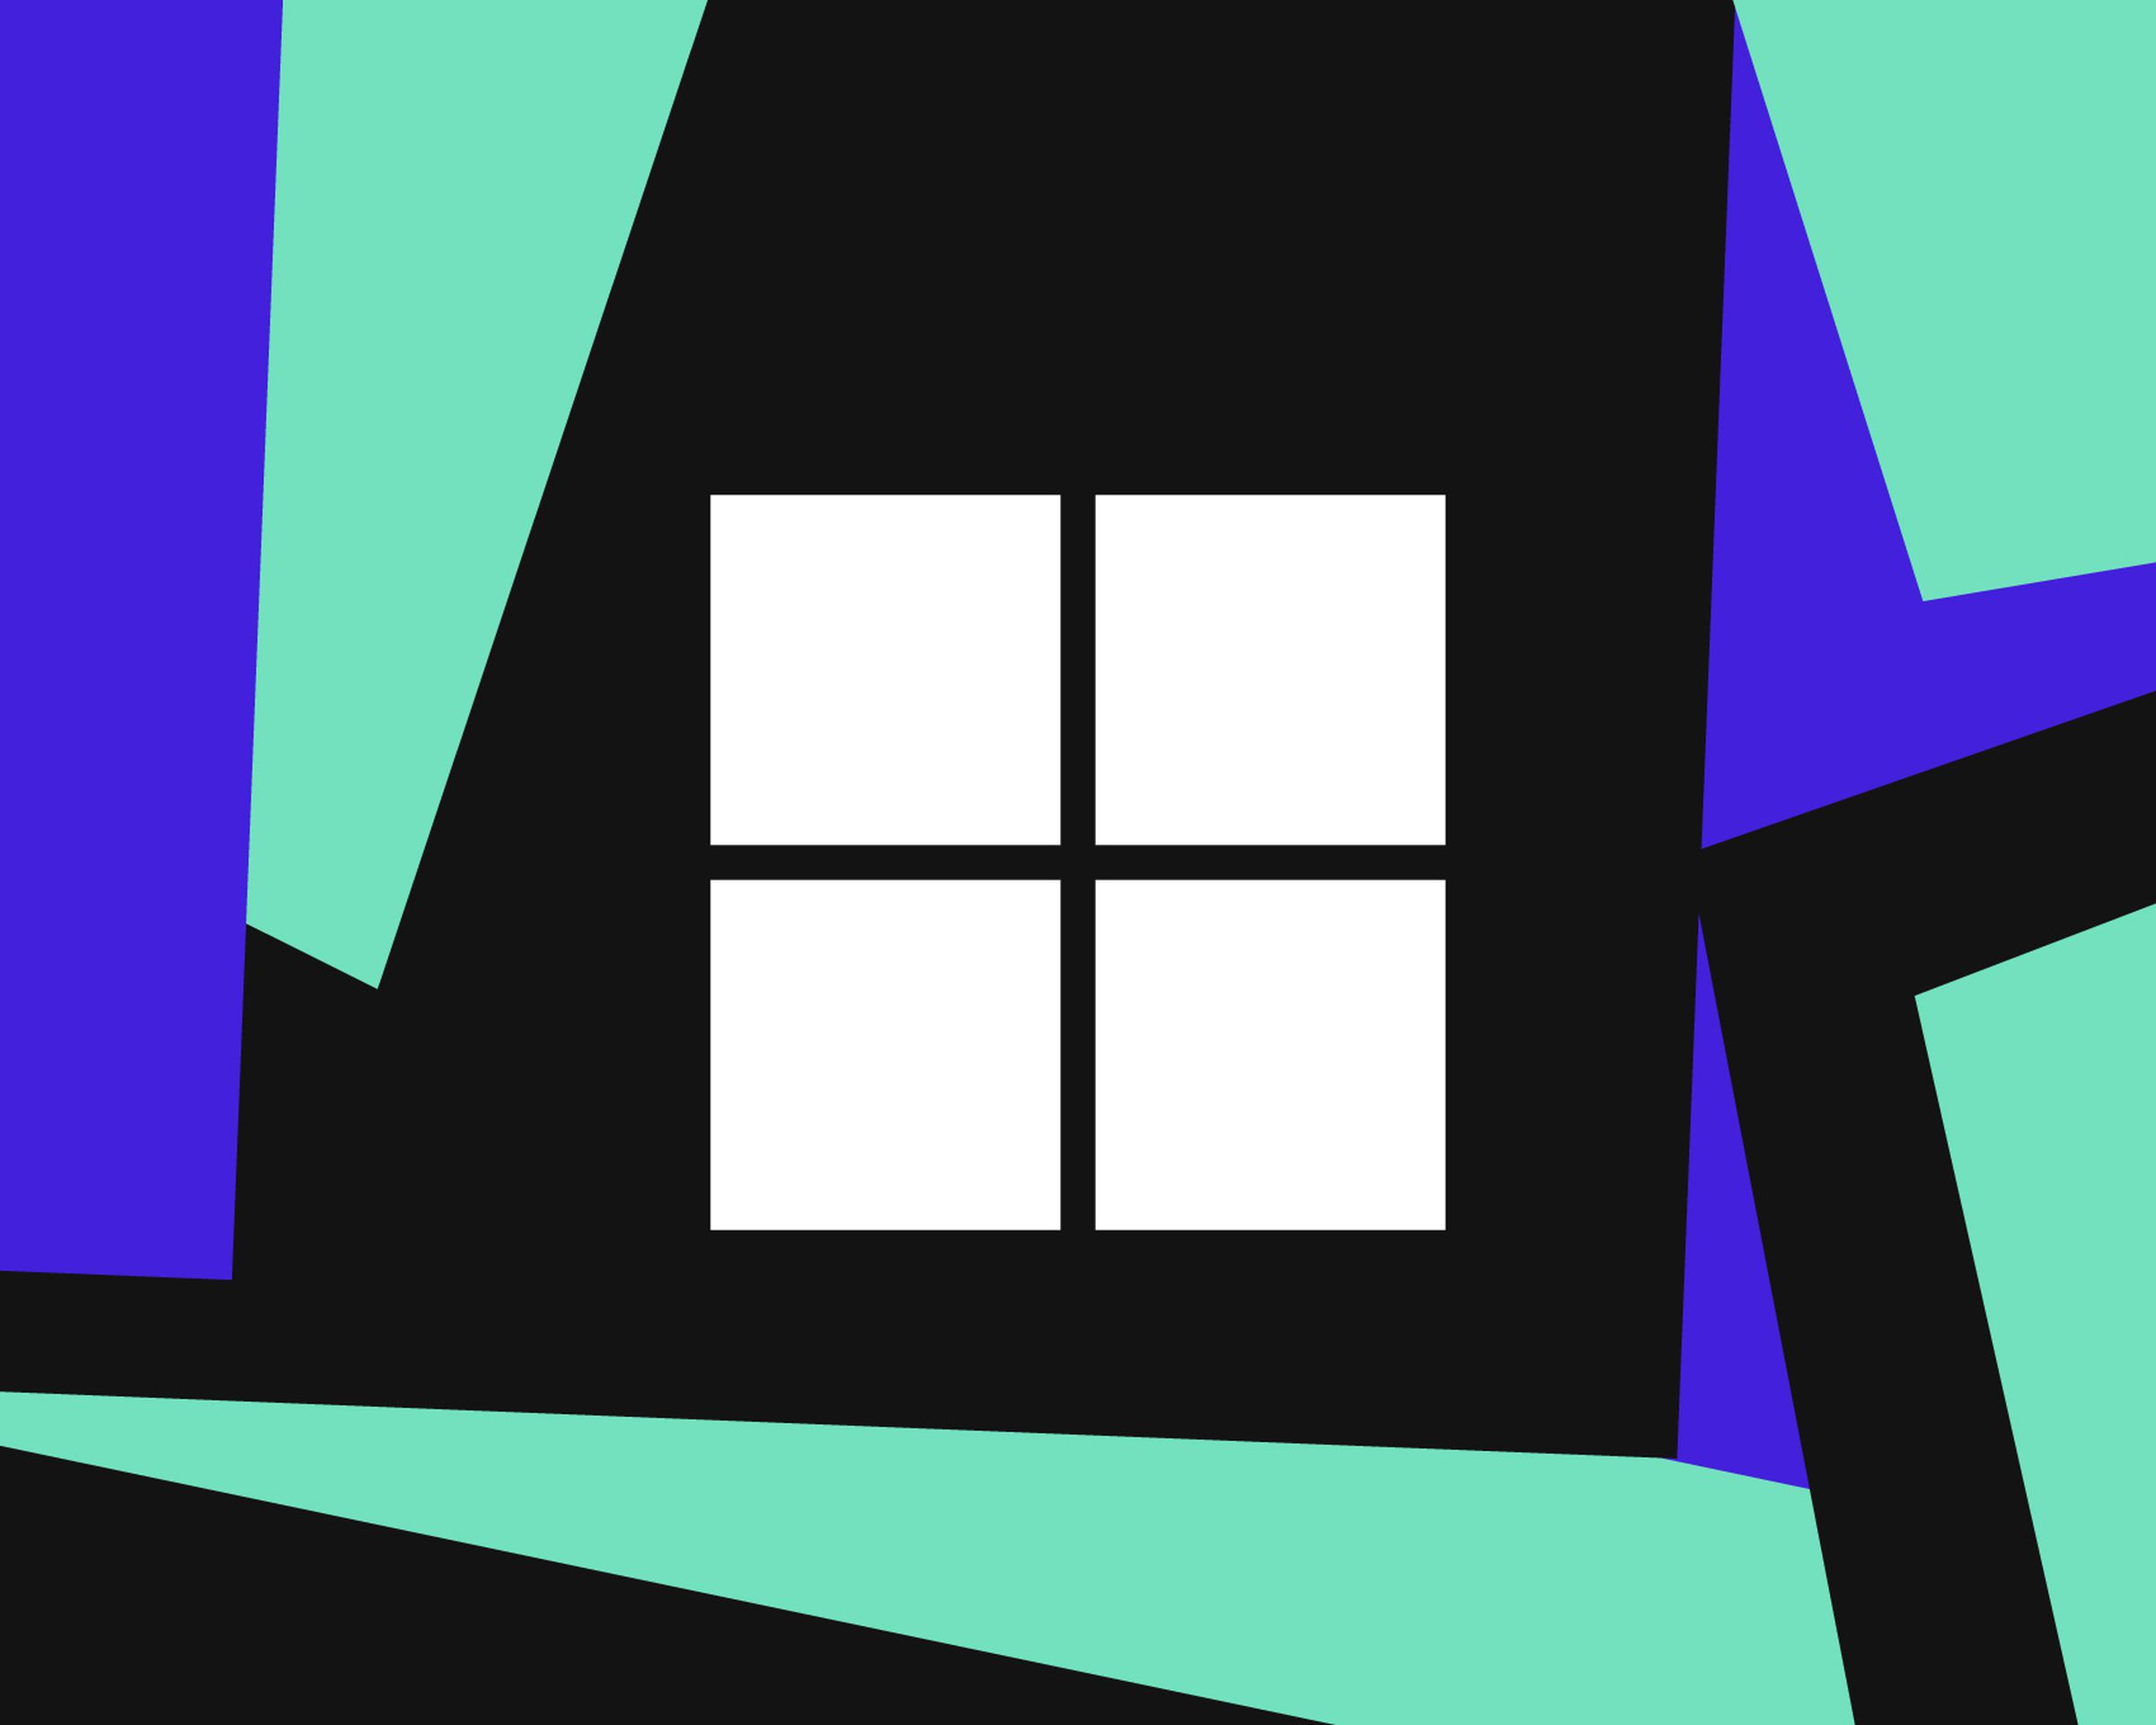 Illustration of Microsoft’s Windows logo